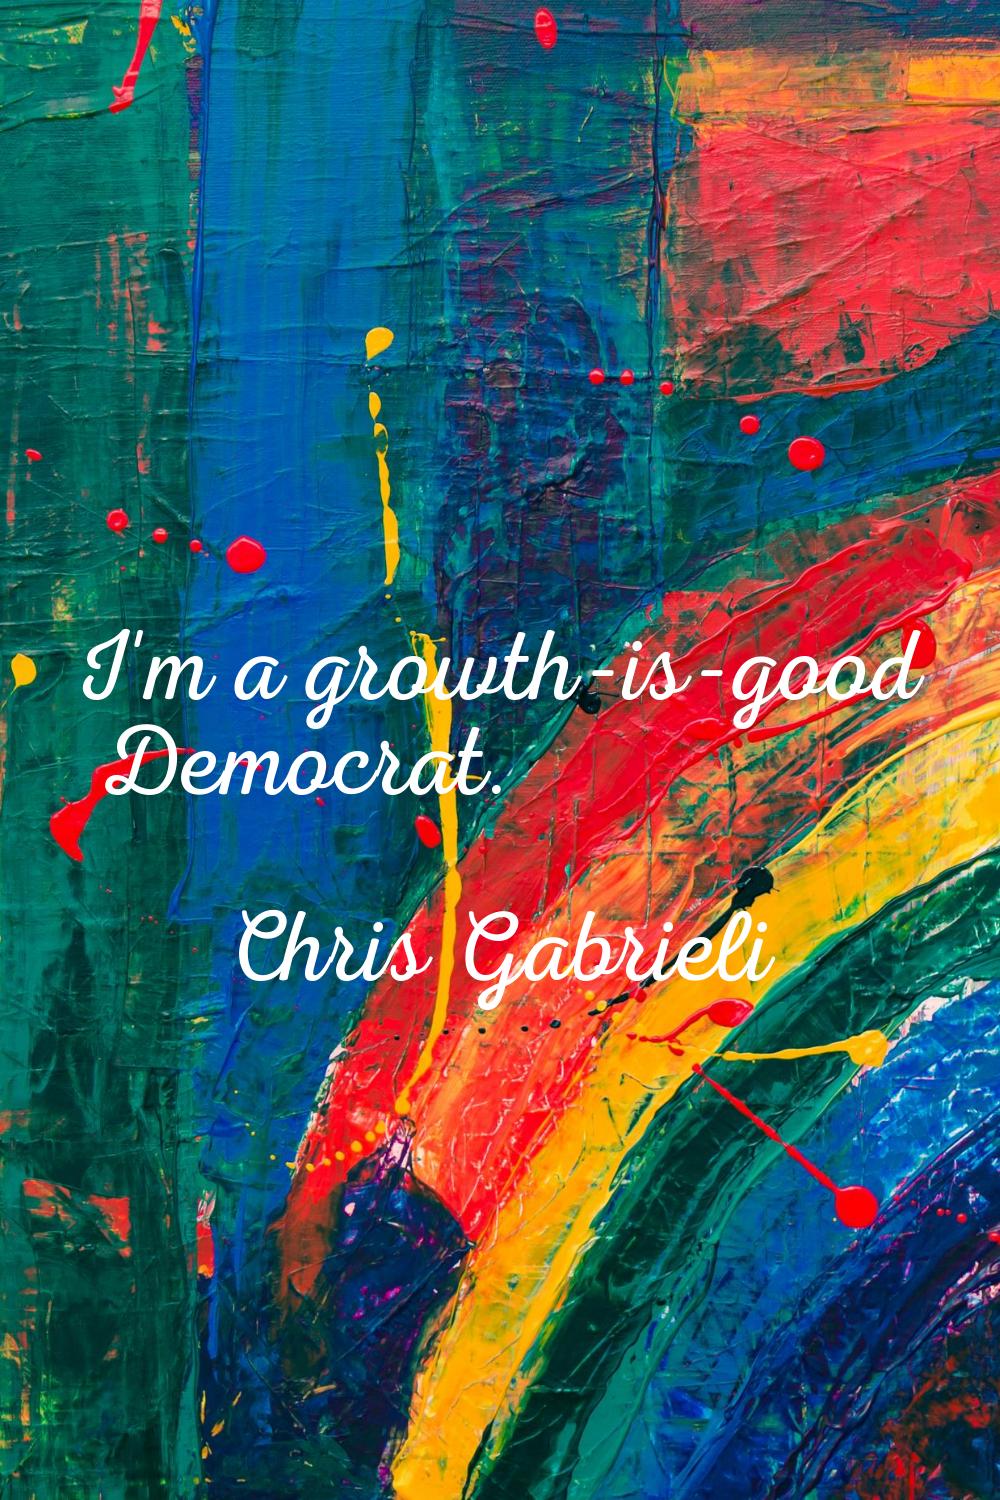 I'm a growth-is-good Democrat.